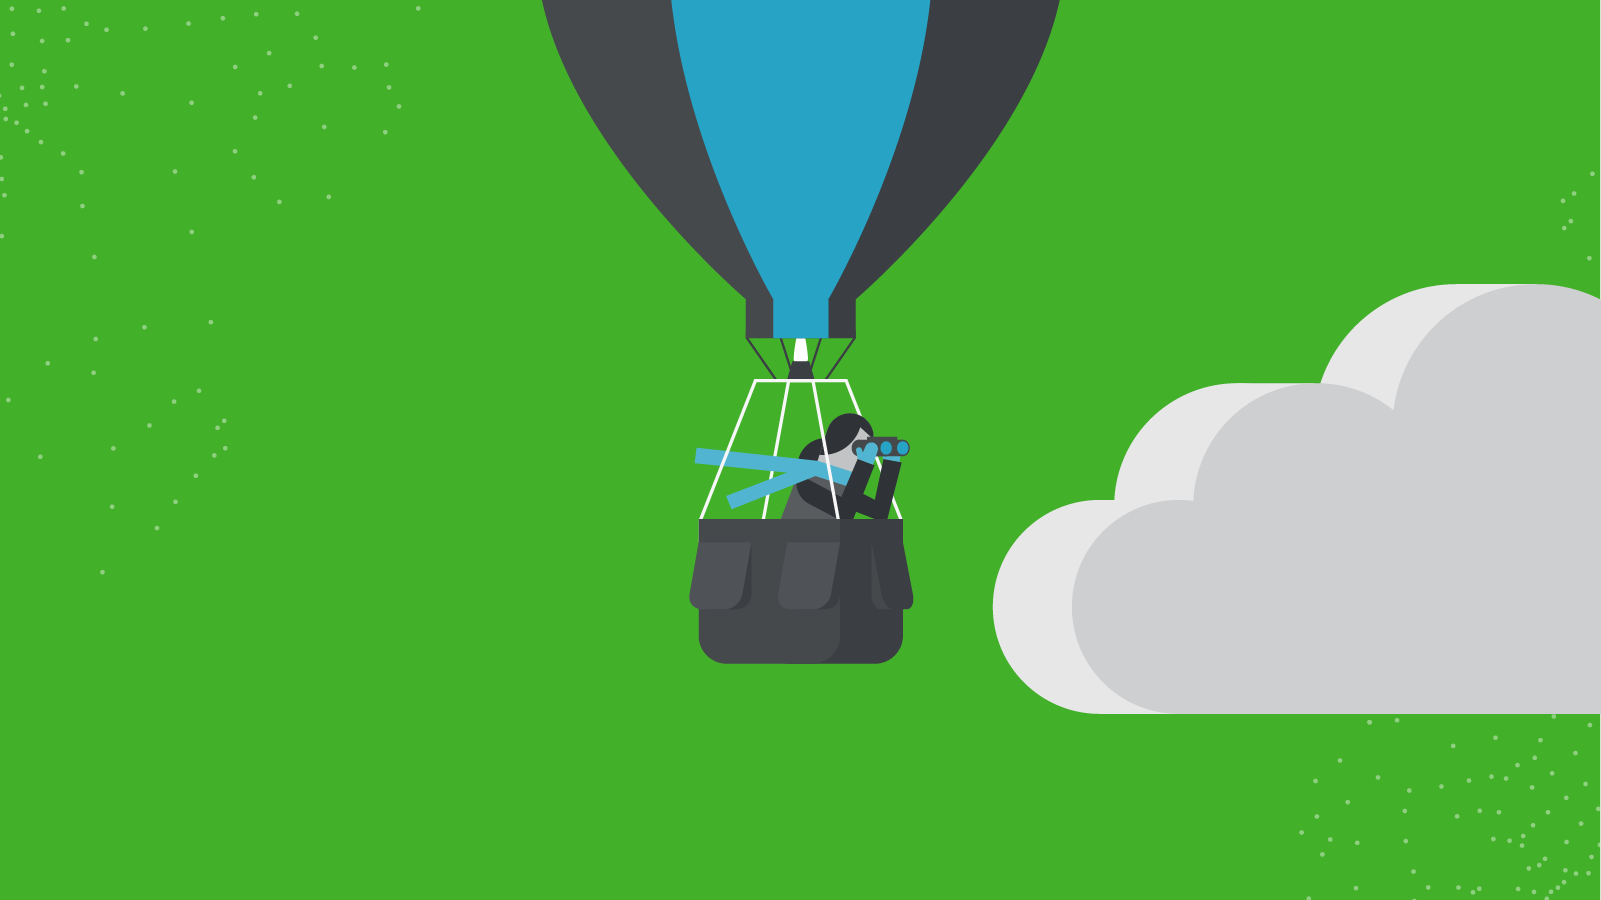 En luftballon der flyver rundt blandt skyer